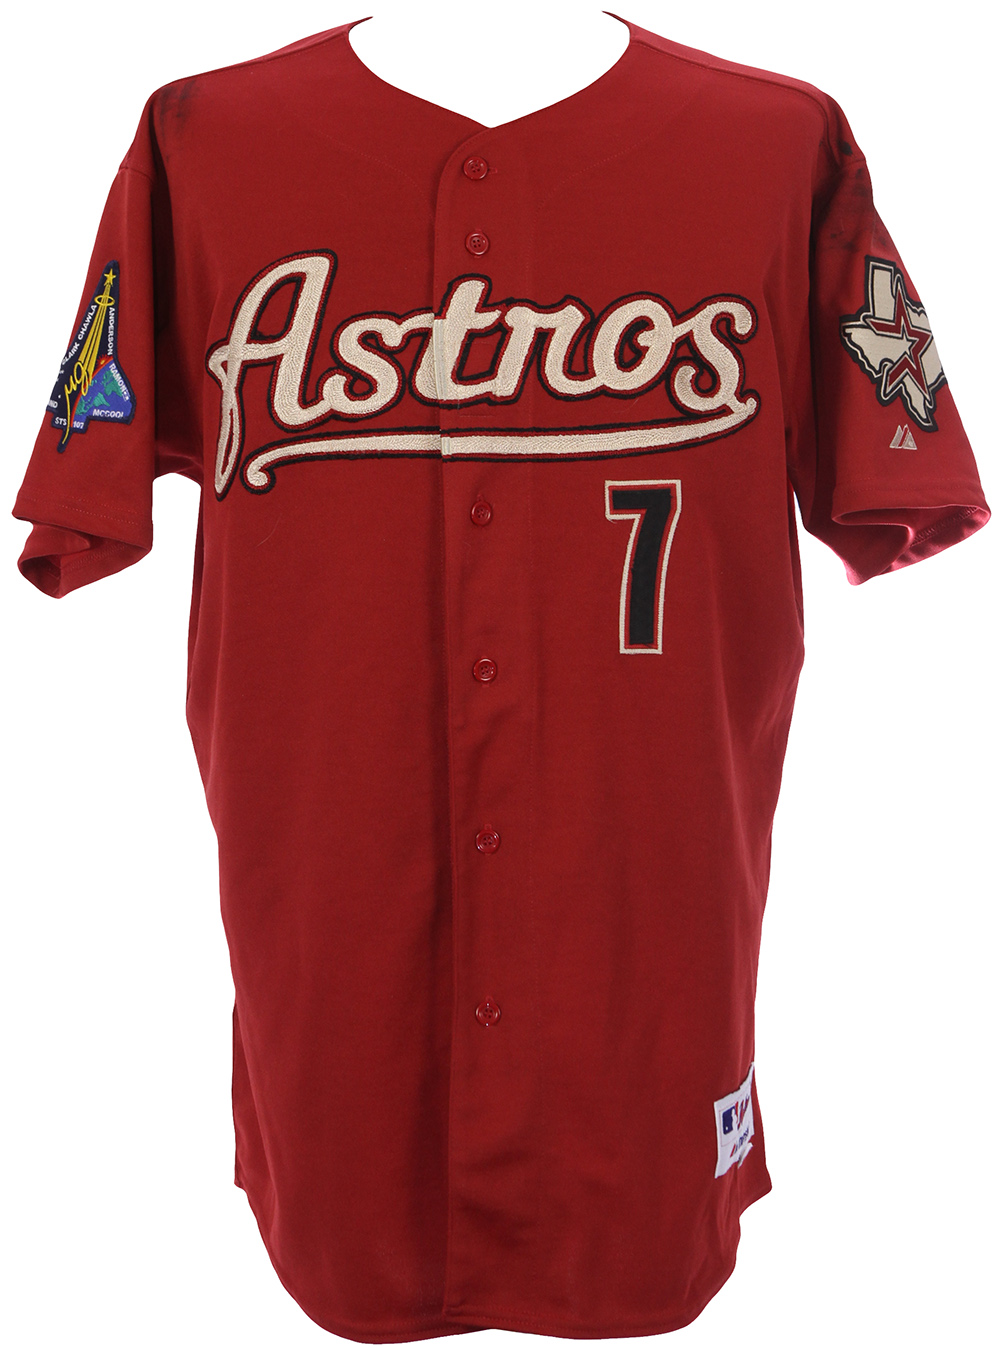 Craig Biggio player worn jersey patch baseball card (Houston Astros) 2002  Topps 206 #TRCB